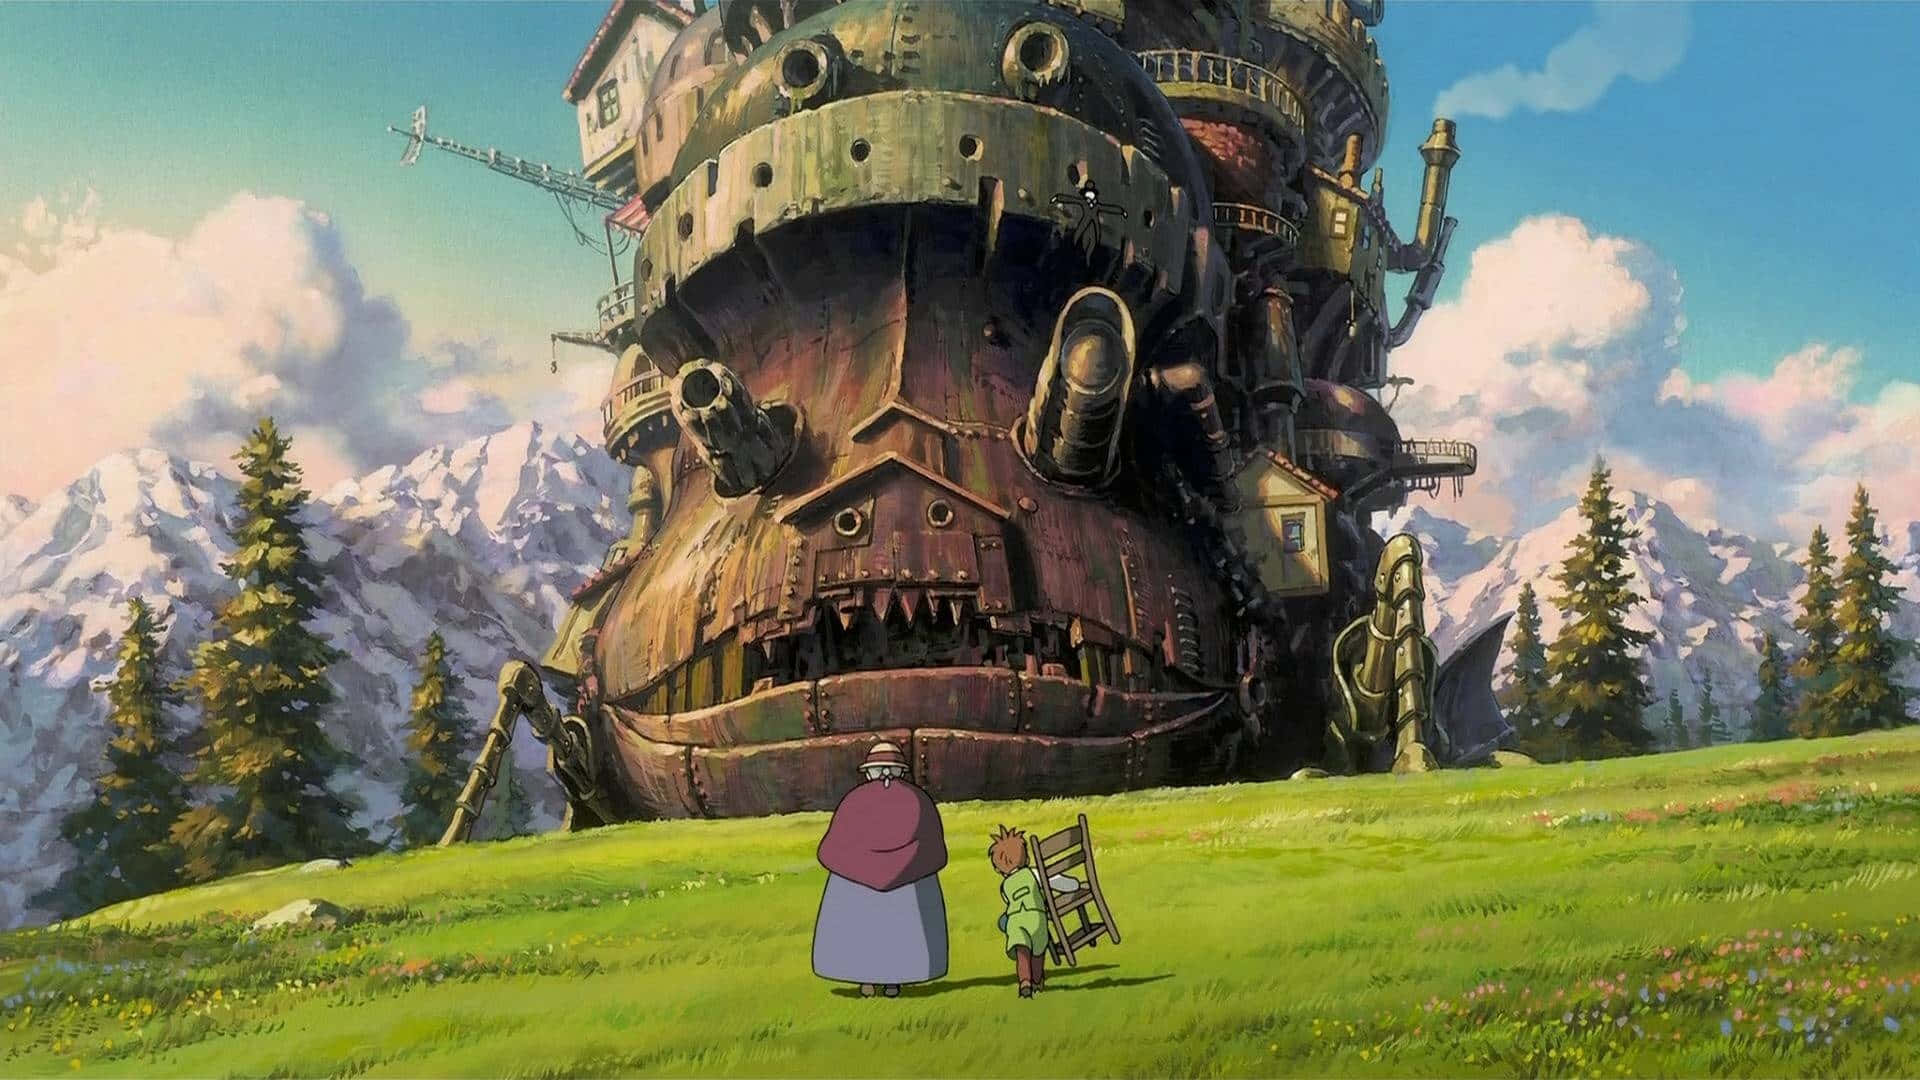 "Explore the beauty of Ghibli." Wallpaper